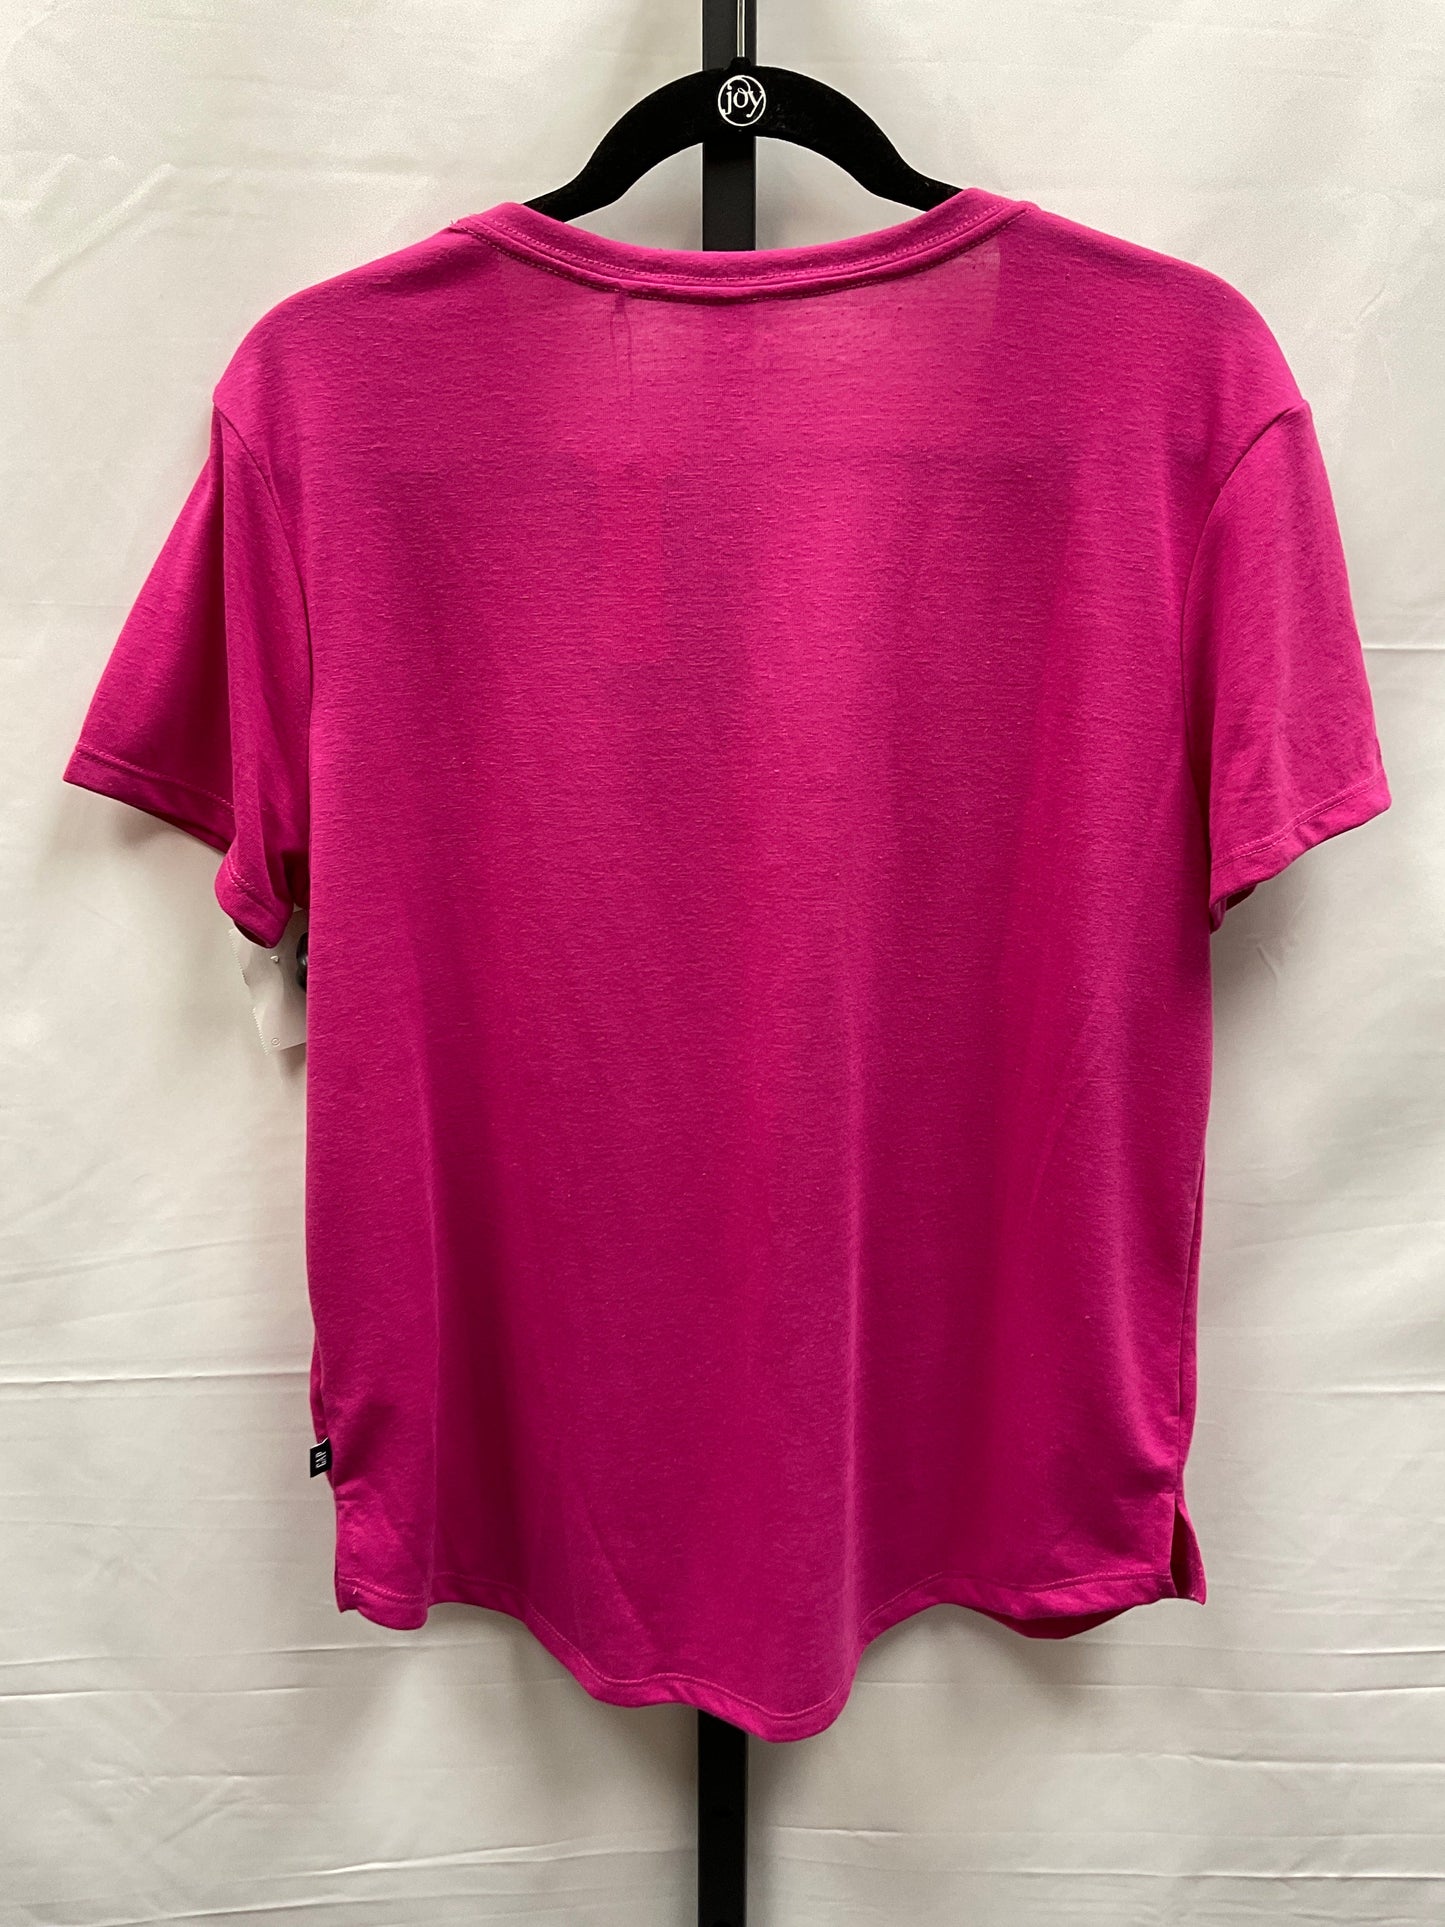 Pink Top Short Sleeve Basic Gap, Size M